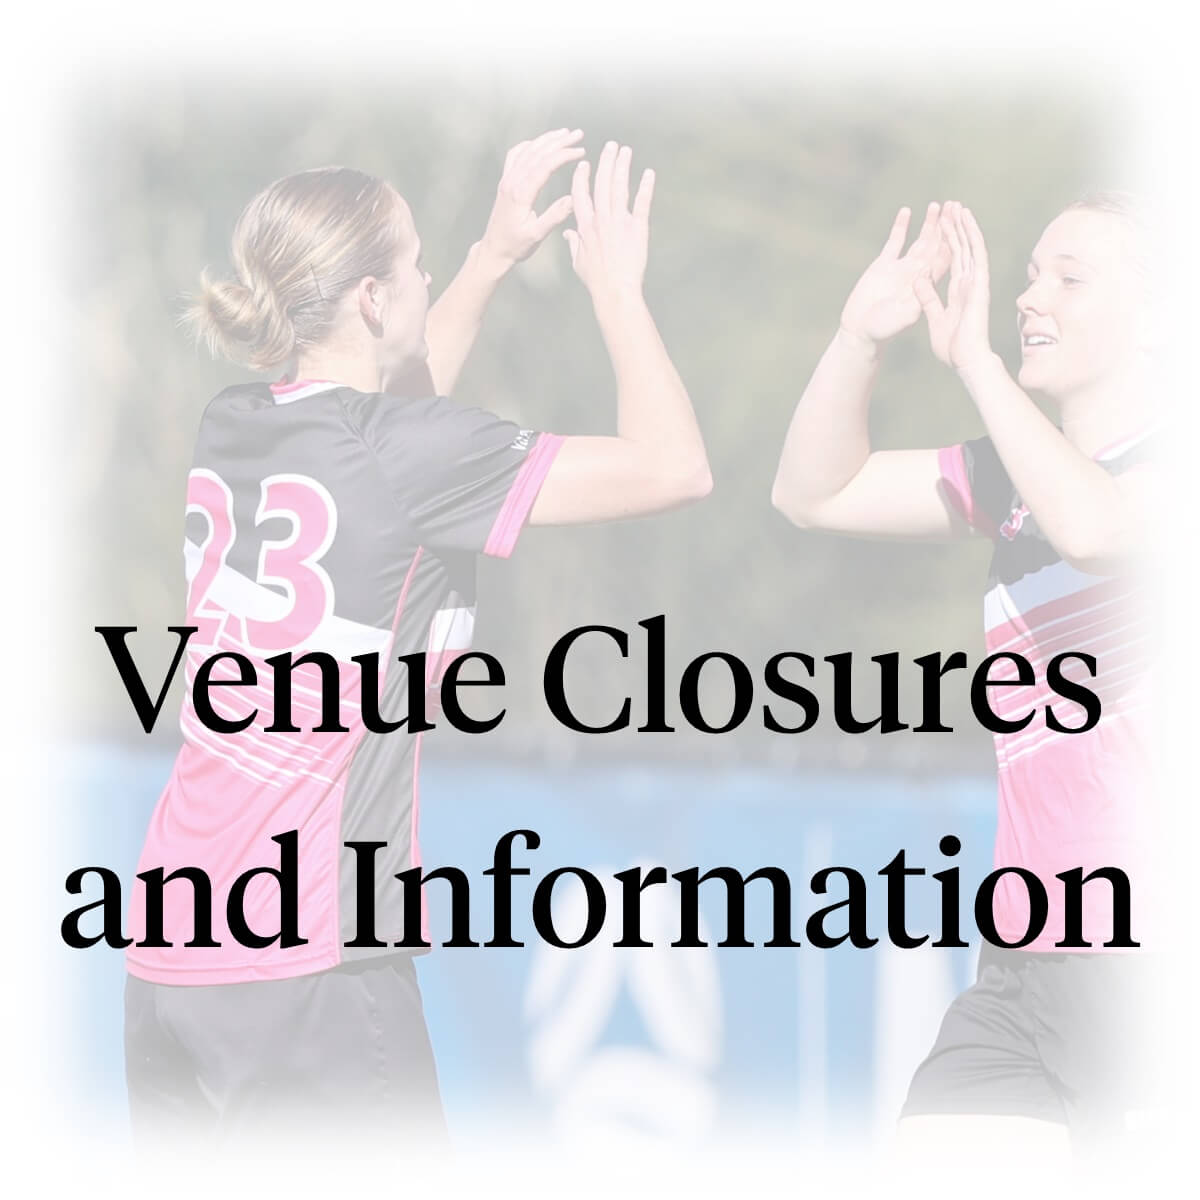 Venue Closure and Information